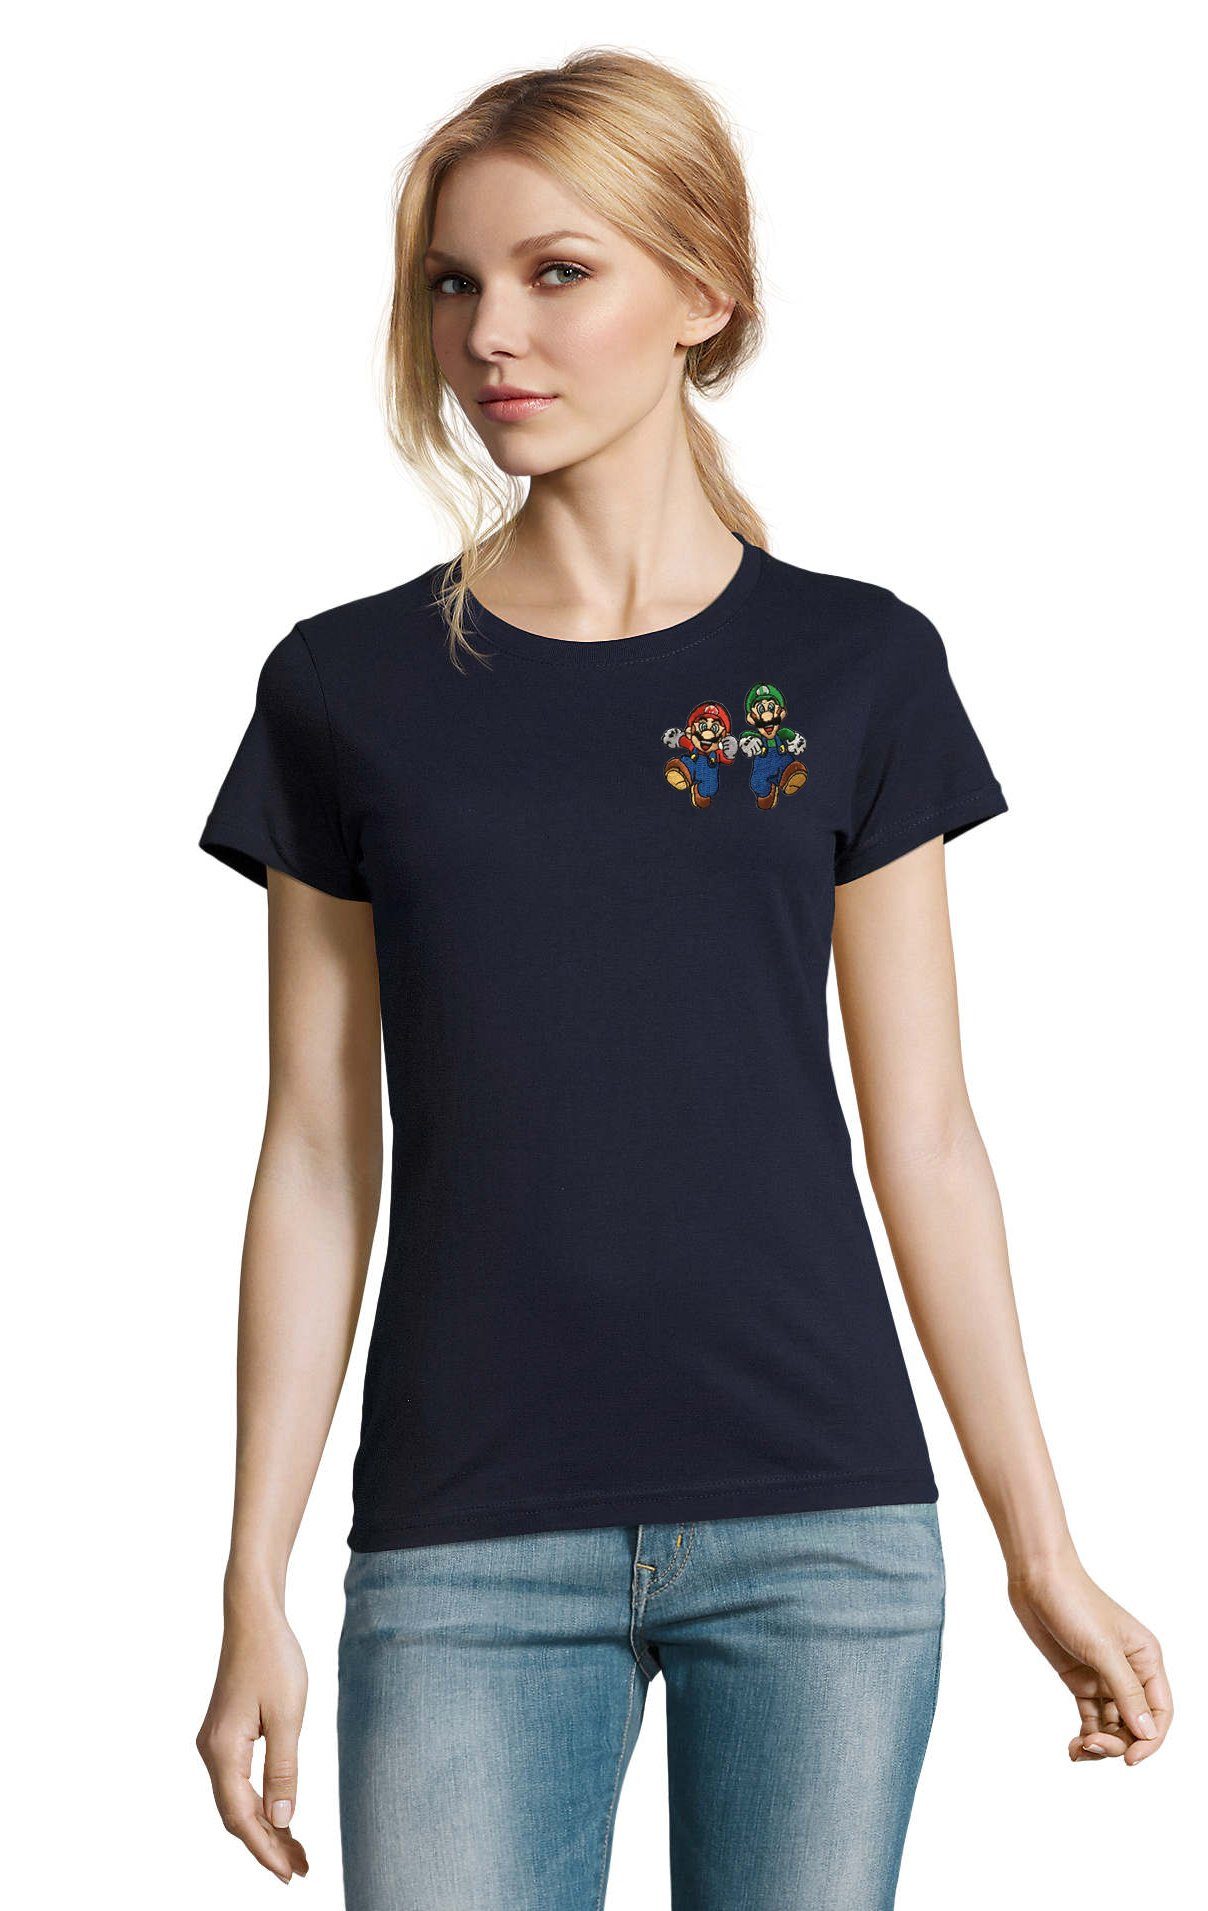 Blondie & Brownie T-Shirt Damen Mario & Luigi Brust Stick Yoshi Bowser Nintendo Gaming bestickt Navyblau